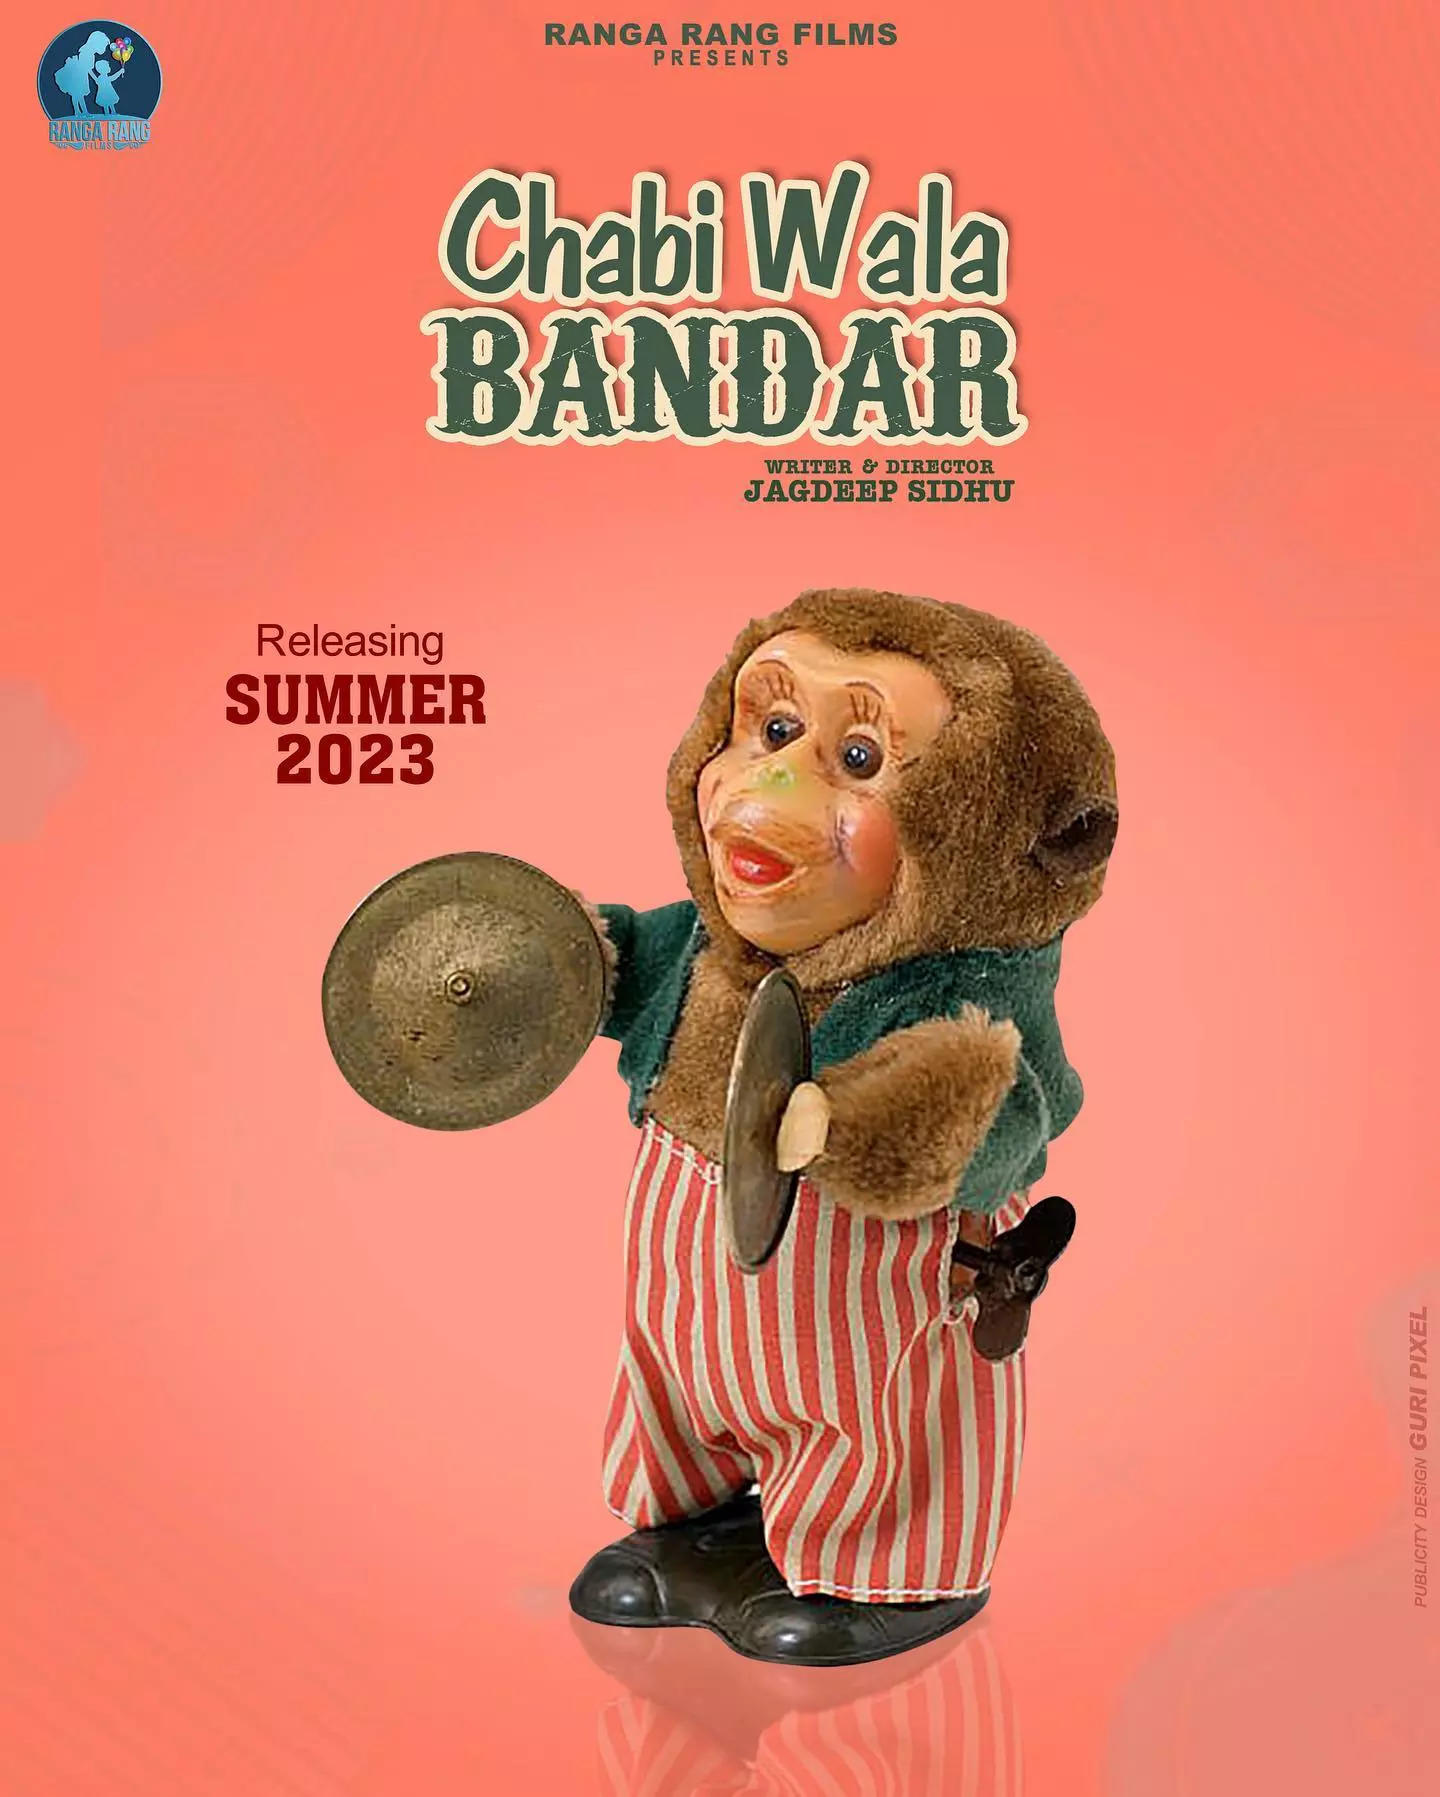 Chabi Wala Bandar: Jagdeep Sidhu shares the poster of his new movie |  Punjabi Movie News - Times of India